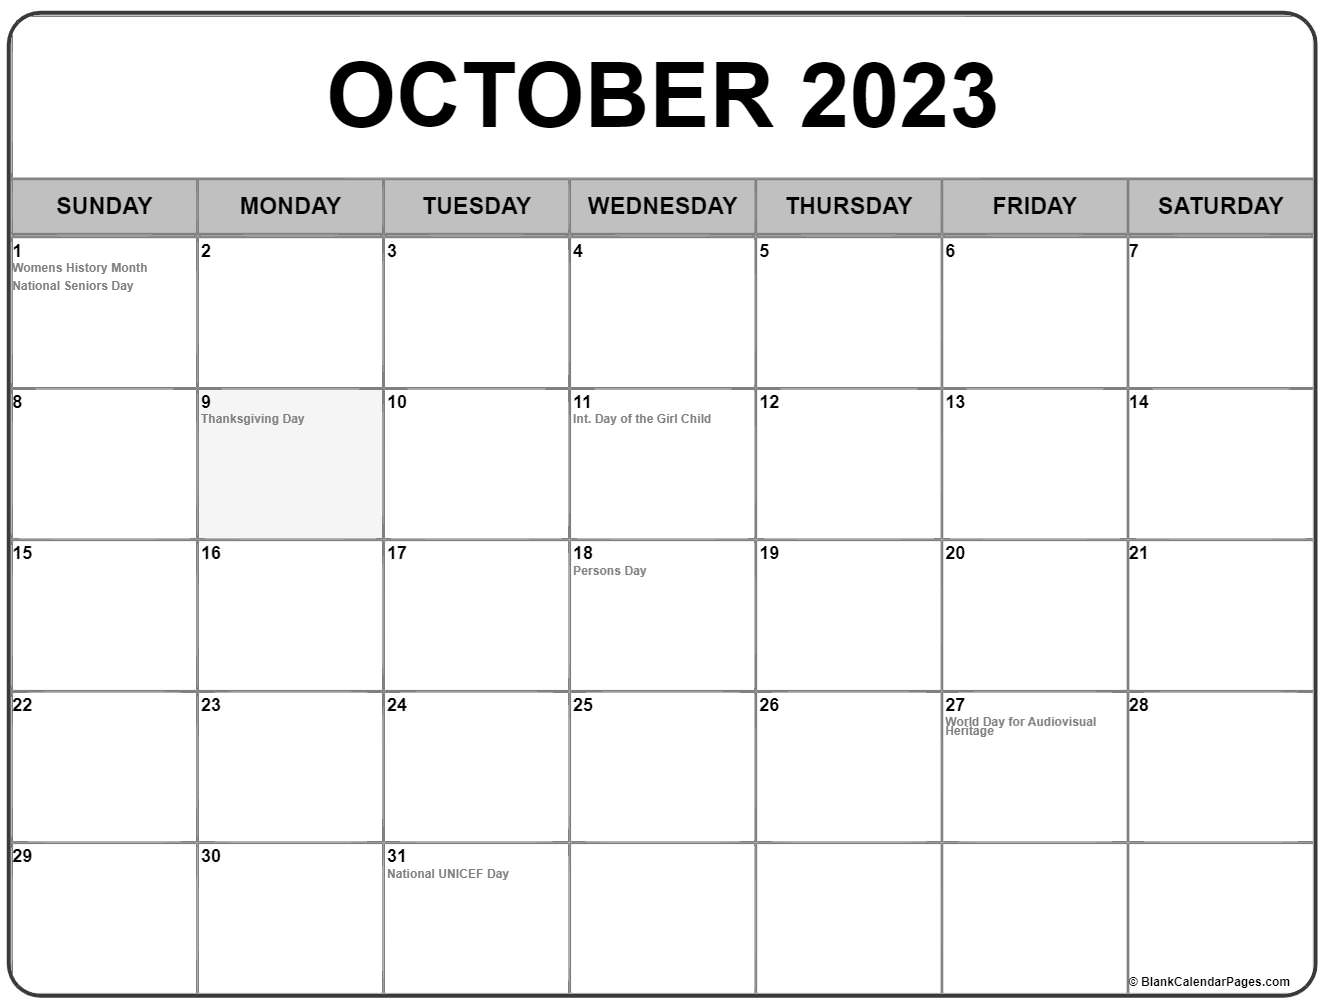 october-2023-calendar-free-printable-calendar-blank-october-2023